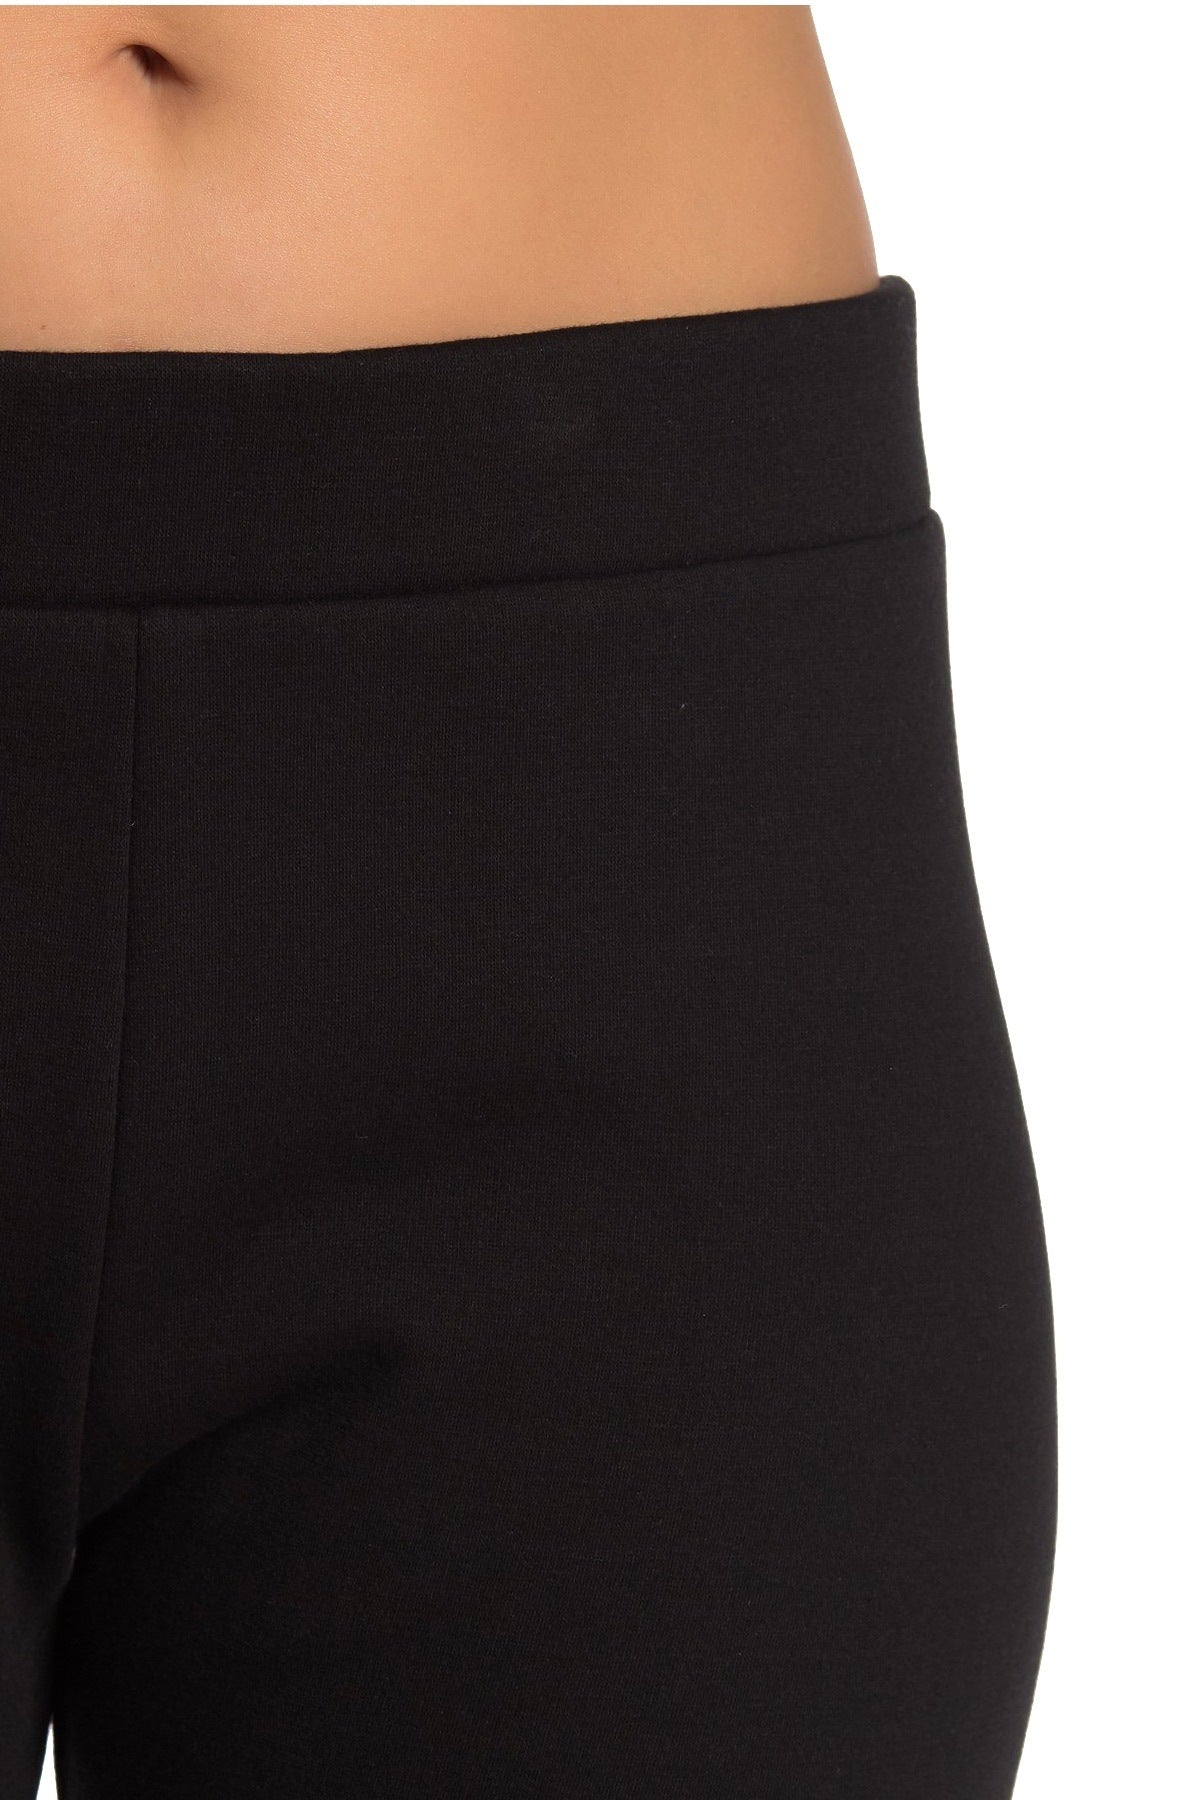 UGG Goldie Fleece Lined Legging in Black